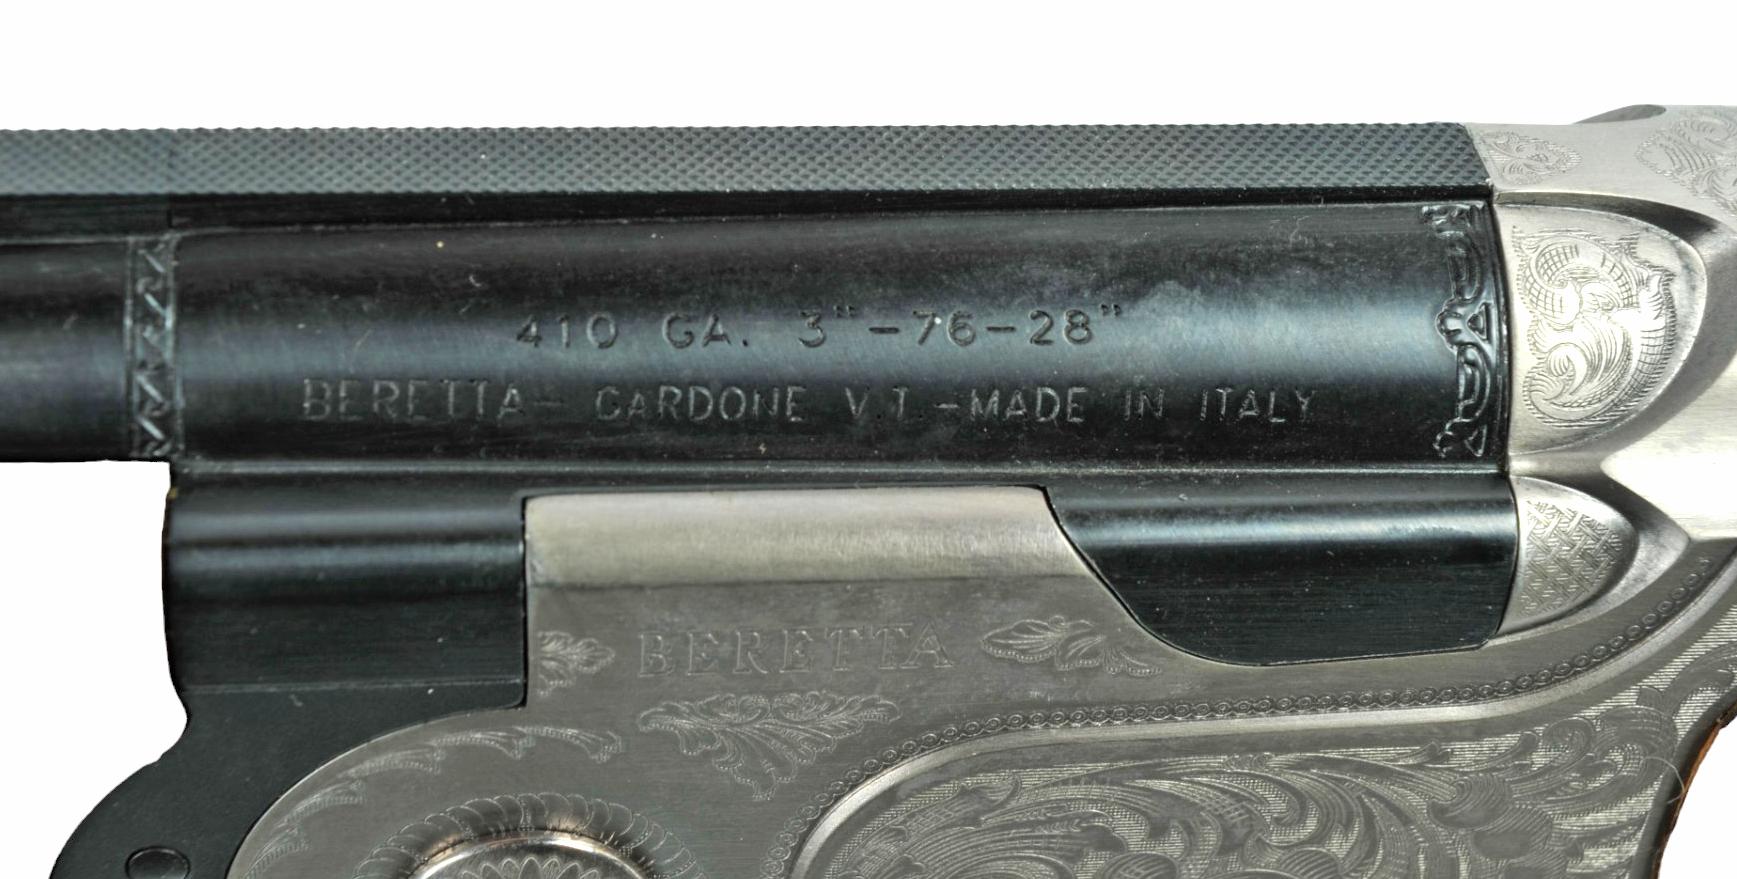 Beretta Model 691 .410 Ga Over/Under Shotgun - FFL # U91771S (RJD1)